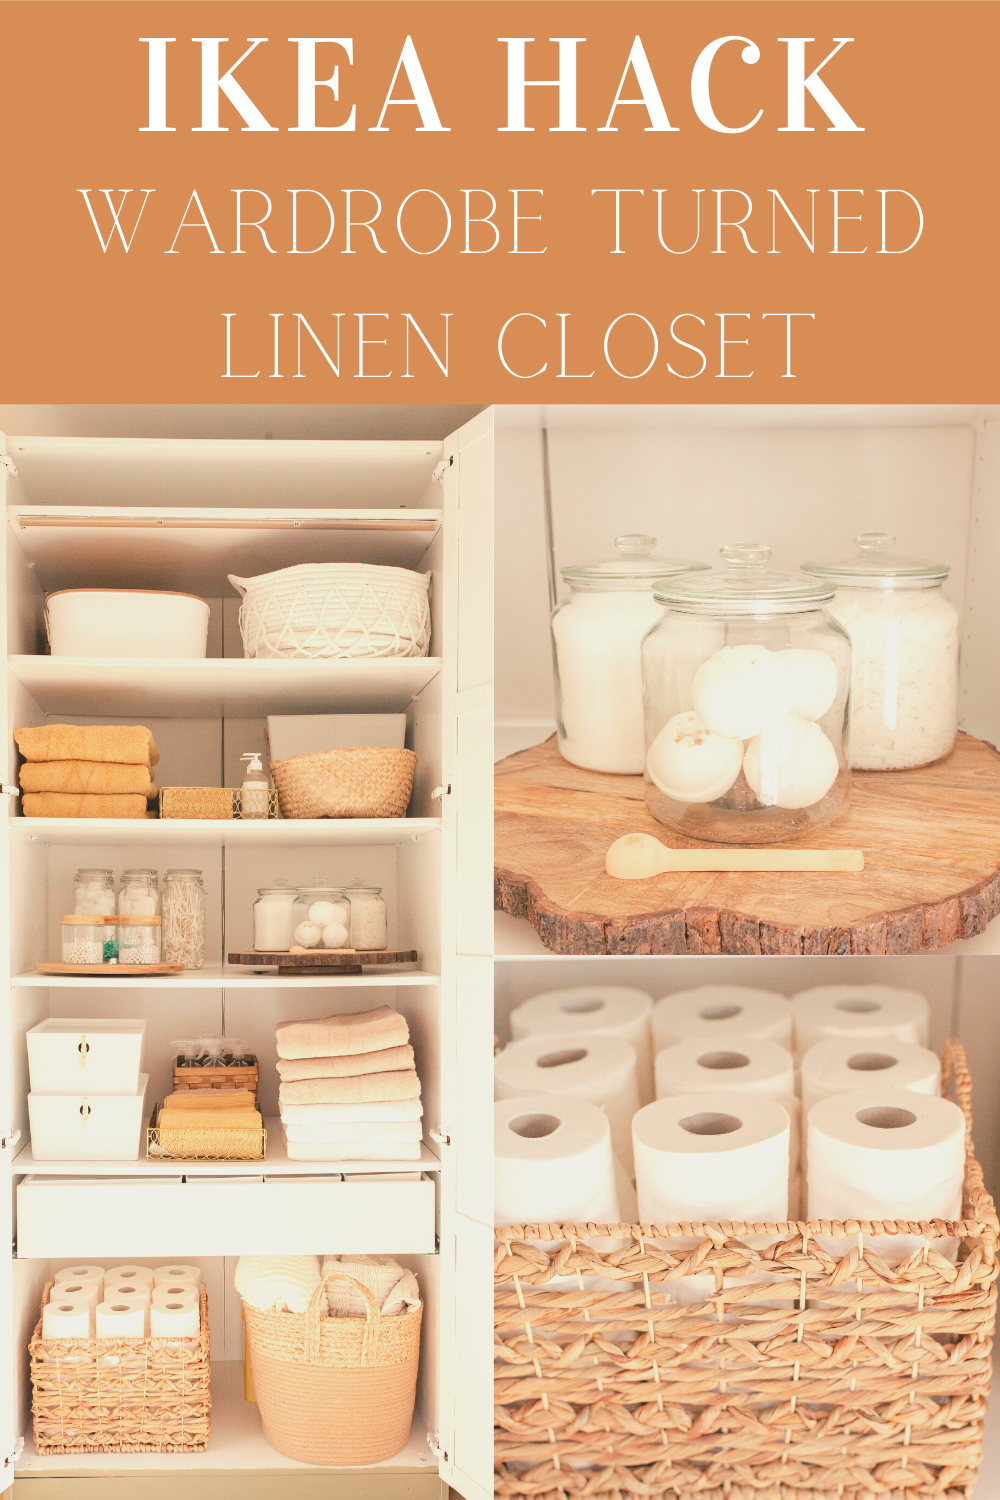 Ikea Hack: Wardrobe Turned Linen Closet - Kari Skelton